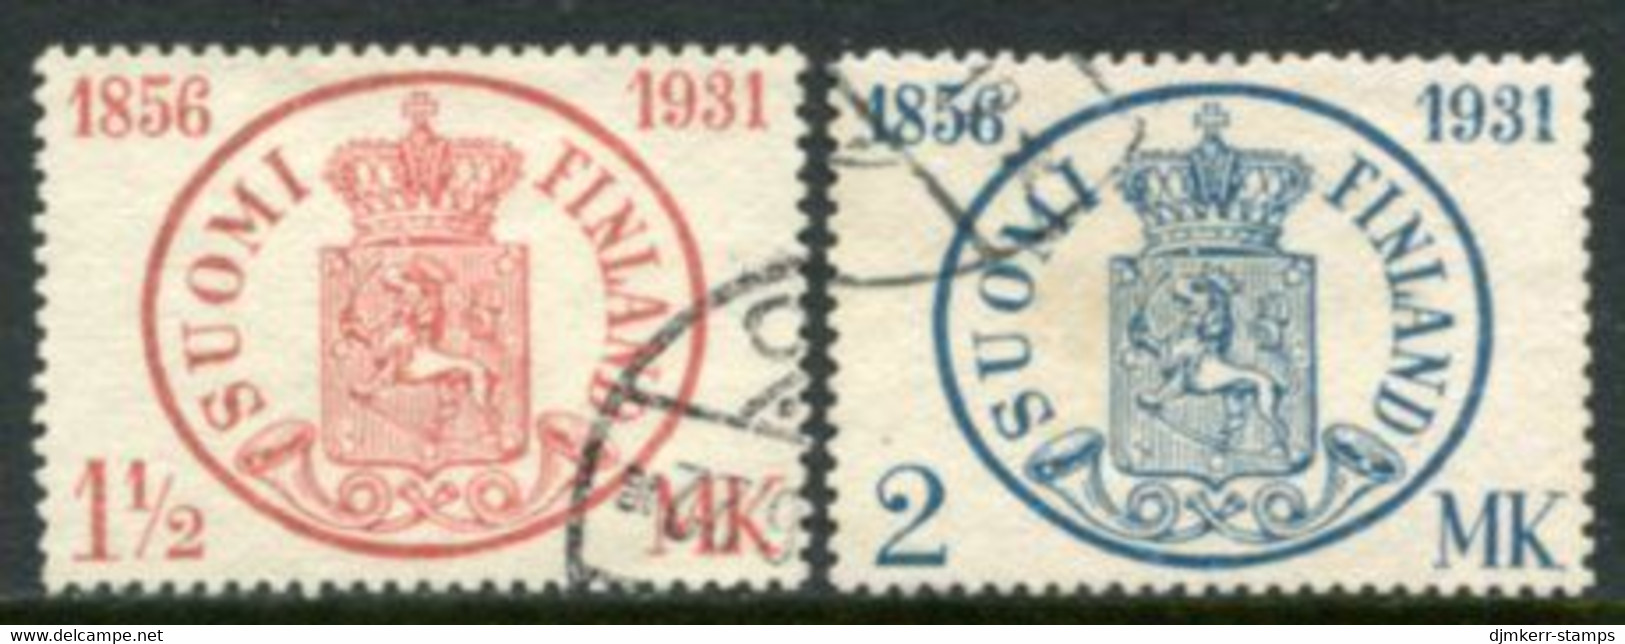 FINLAND 1931 Stamp Anniversary Used.  Michel 167-68 - Gebruikt